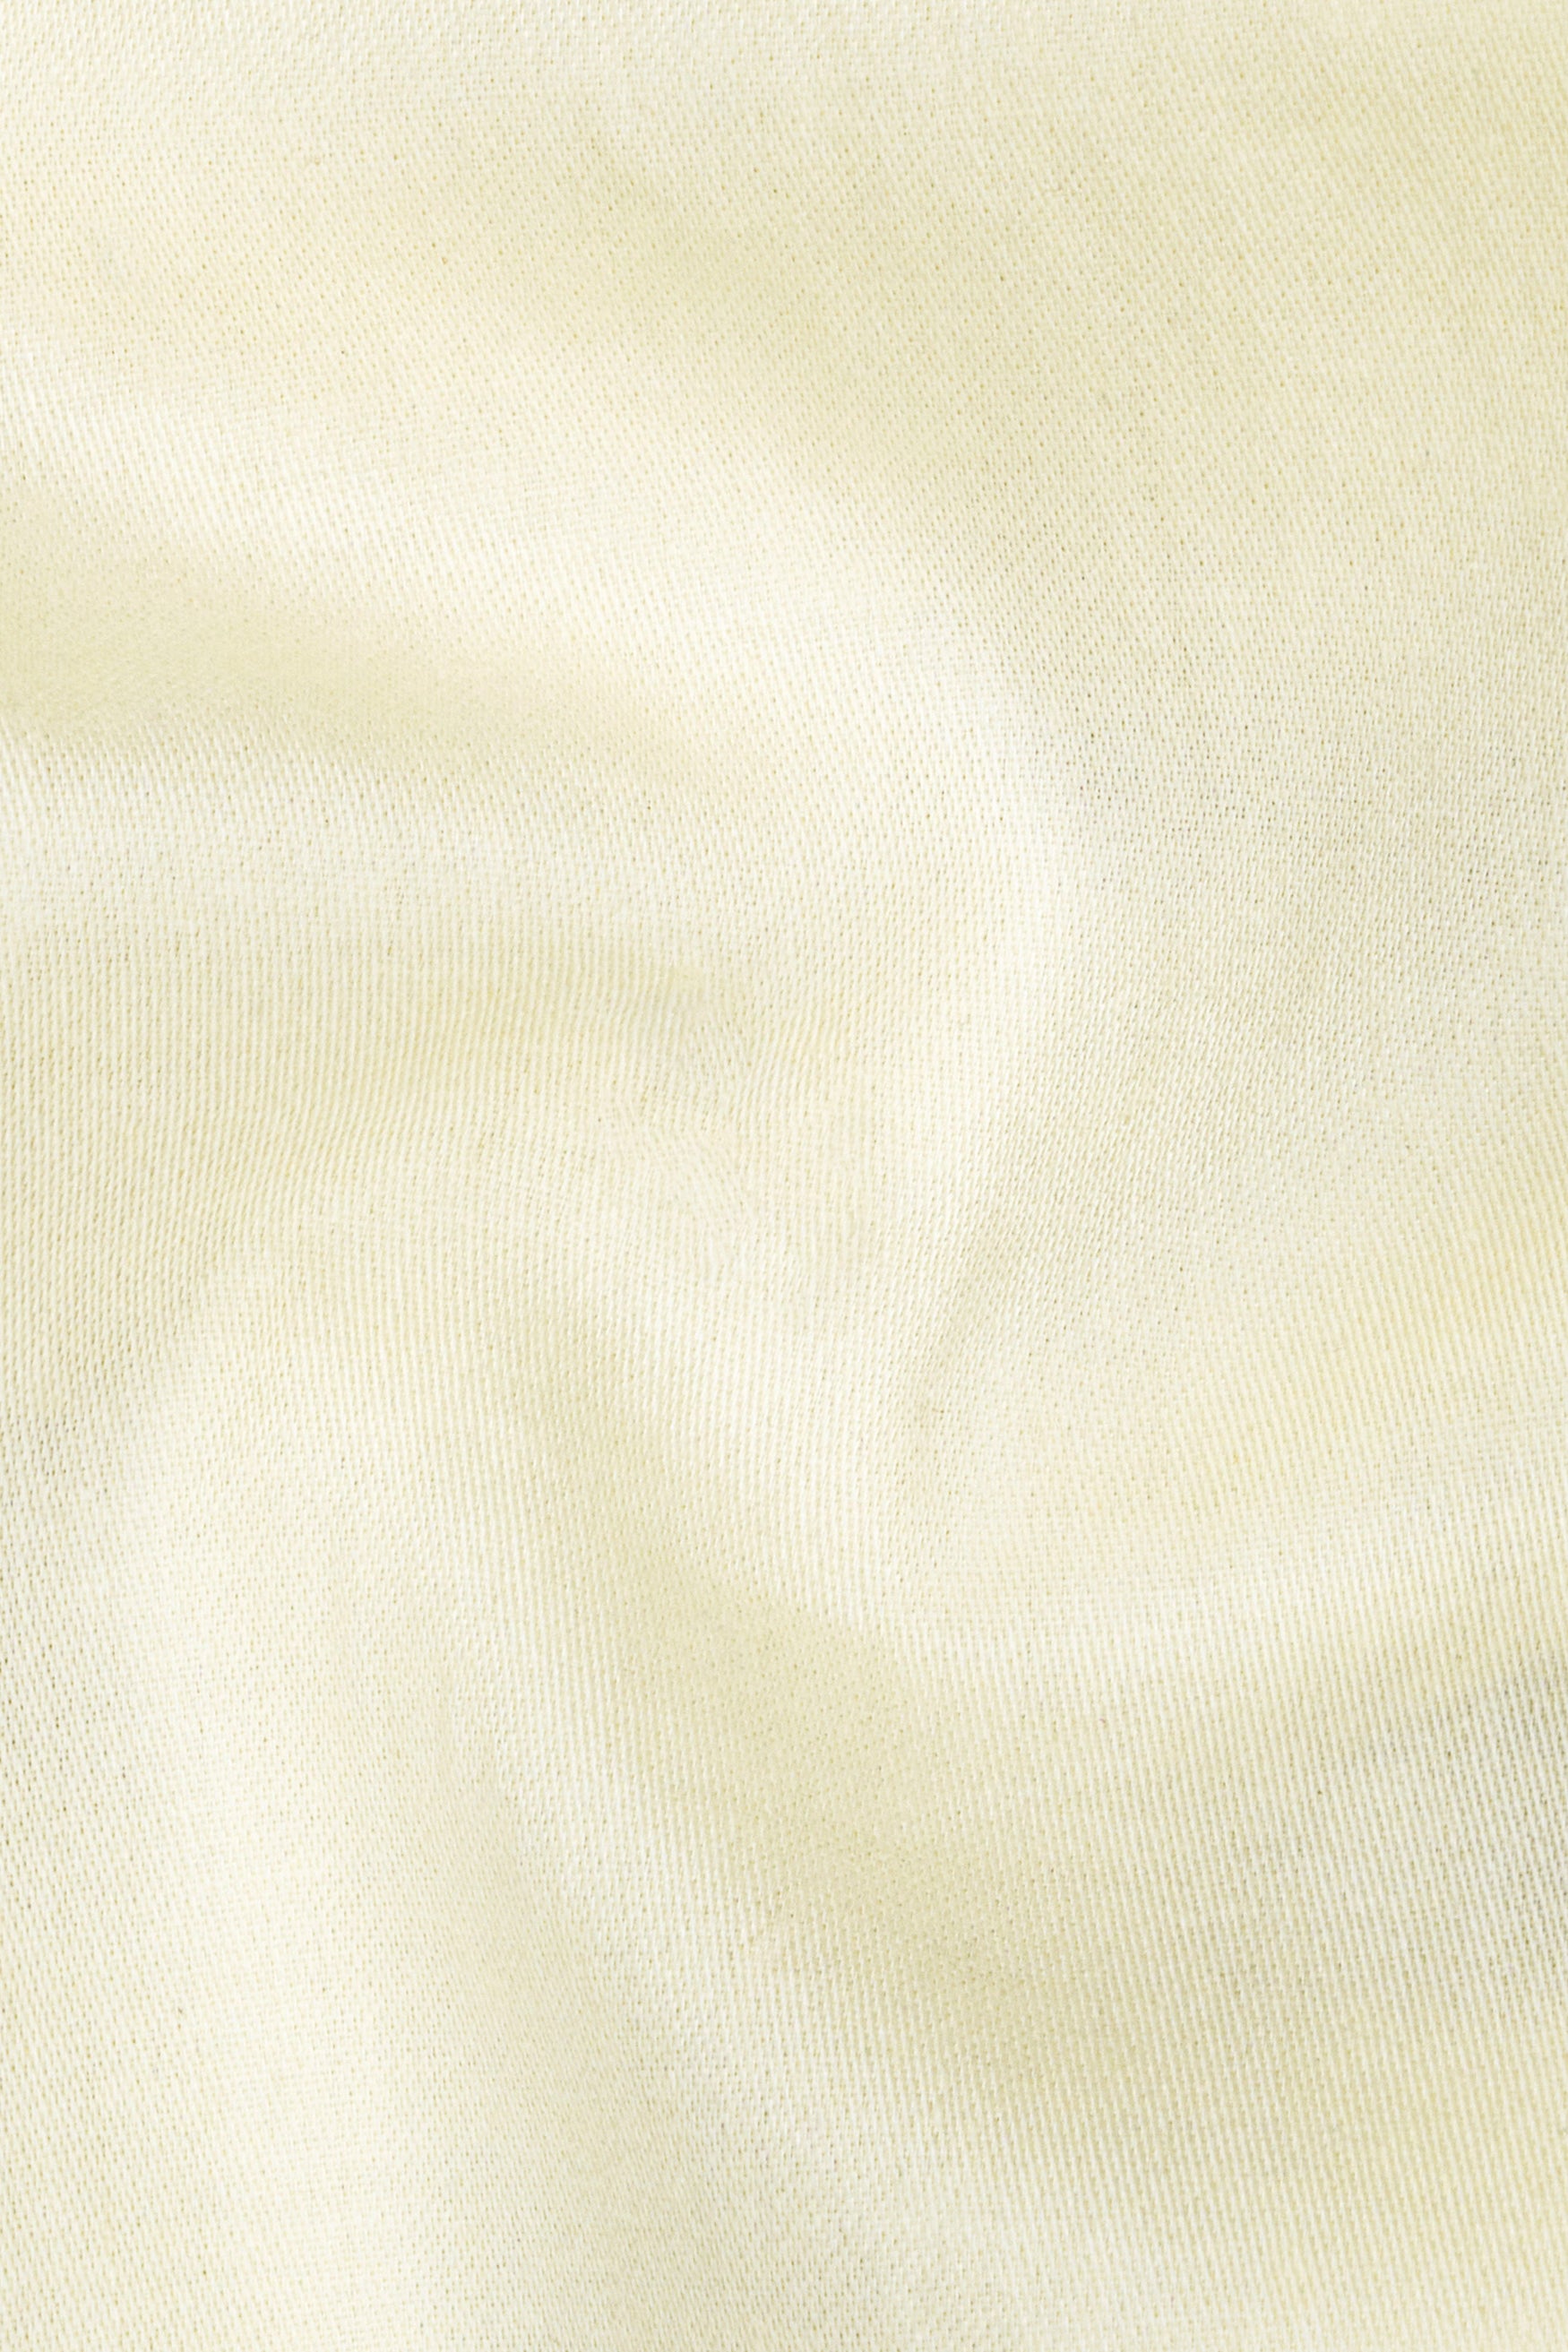 Merino Cream Subtle Sheen Super Soft Premium Cotton Kurta